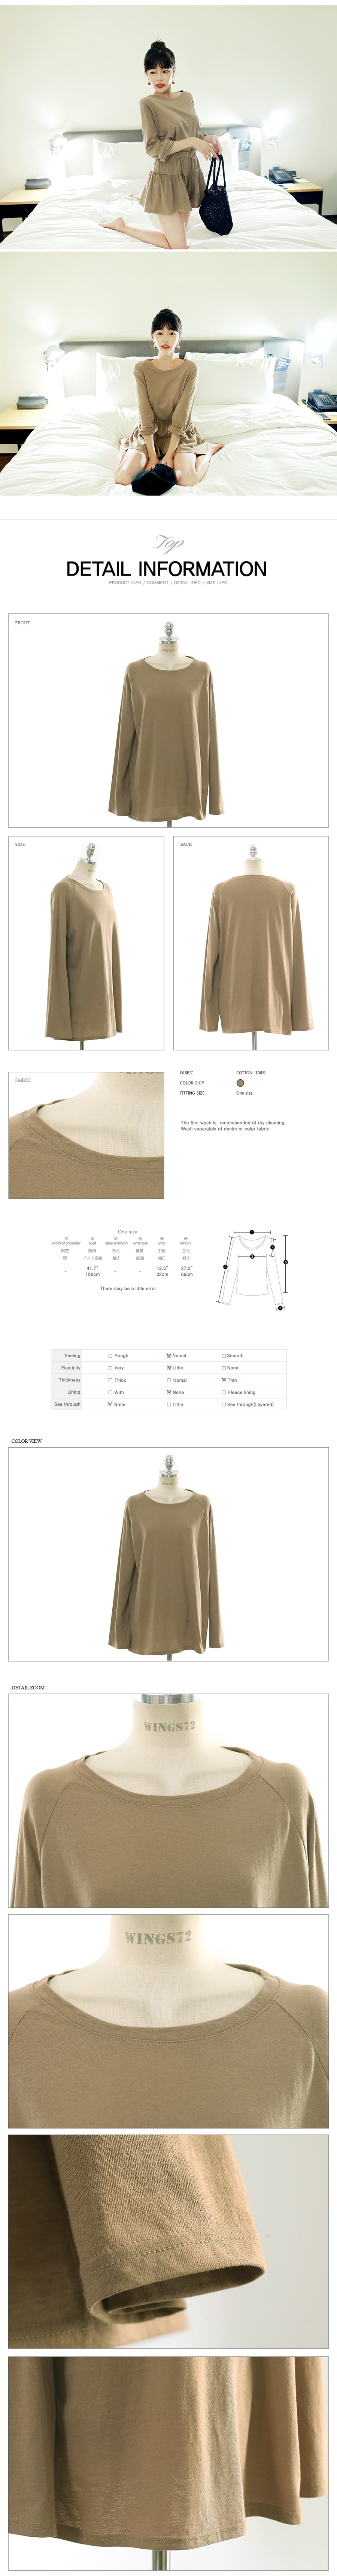 KOREA Raglan T-shirt+Wide Leg Shorts 2 Pieces Set #Beige One Size(S-M) [Free Shipping]